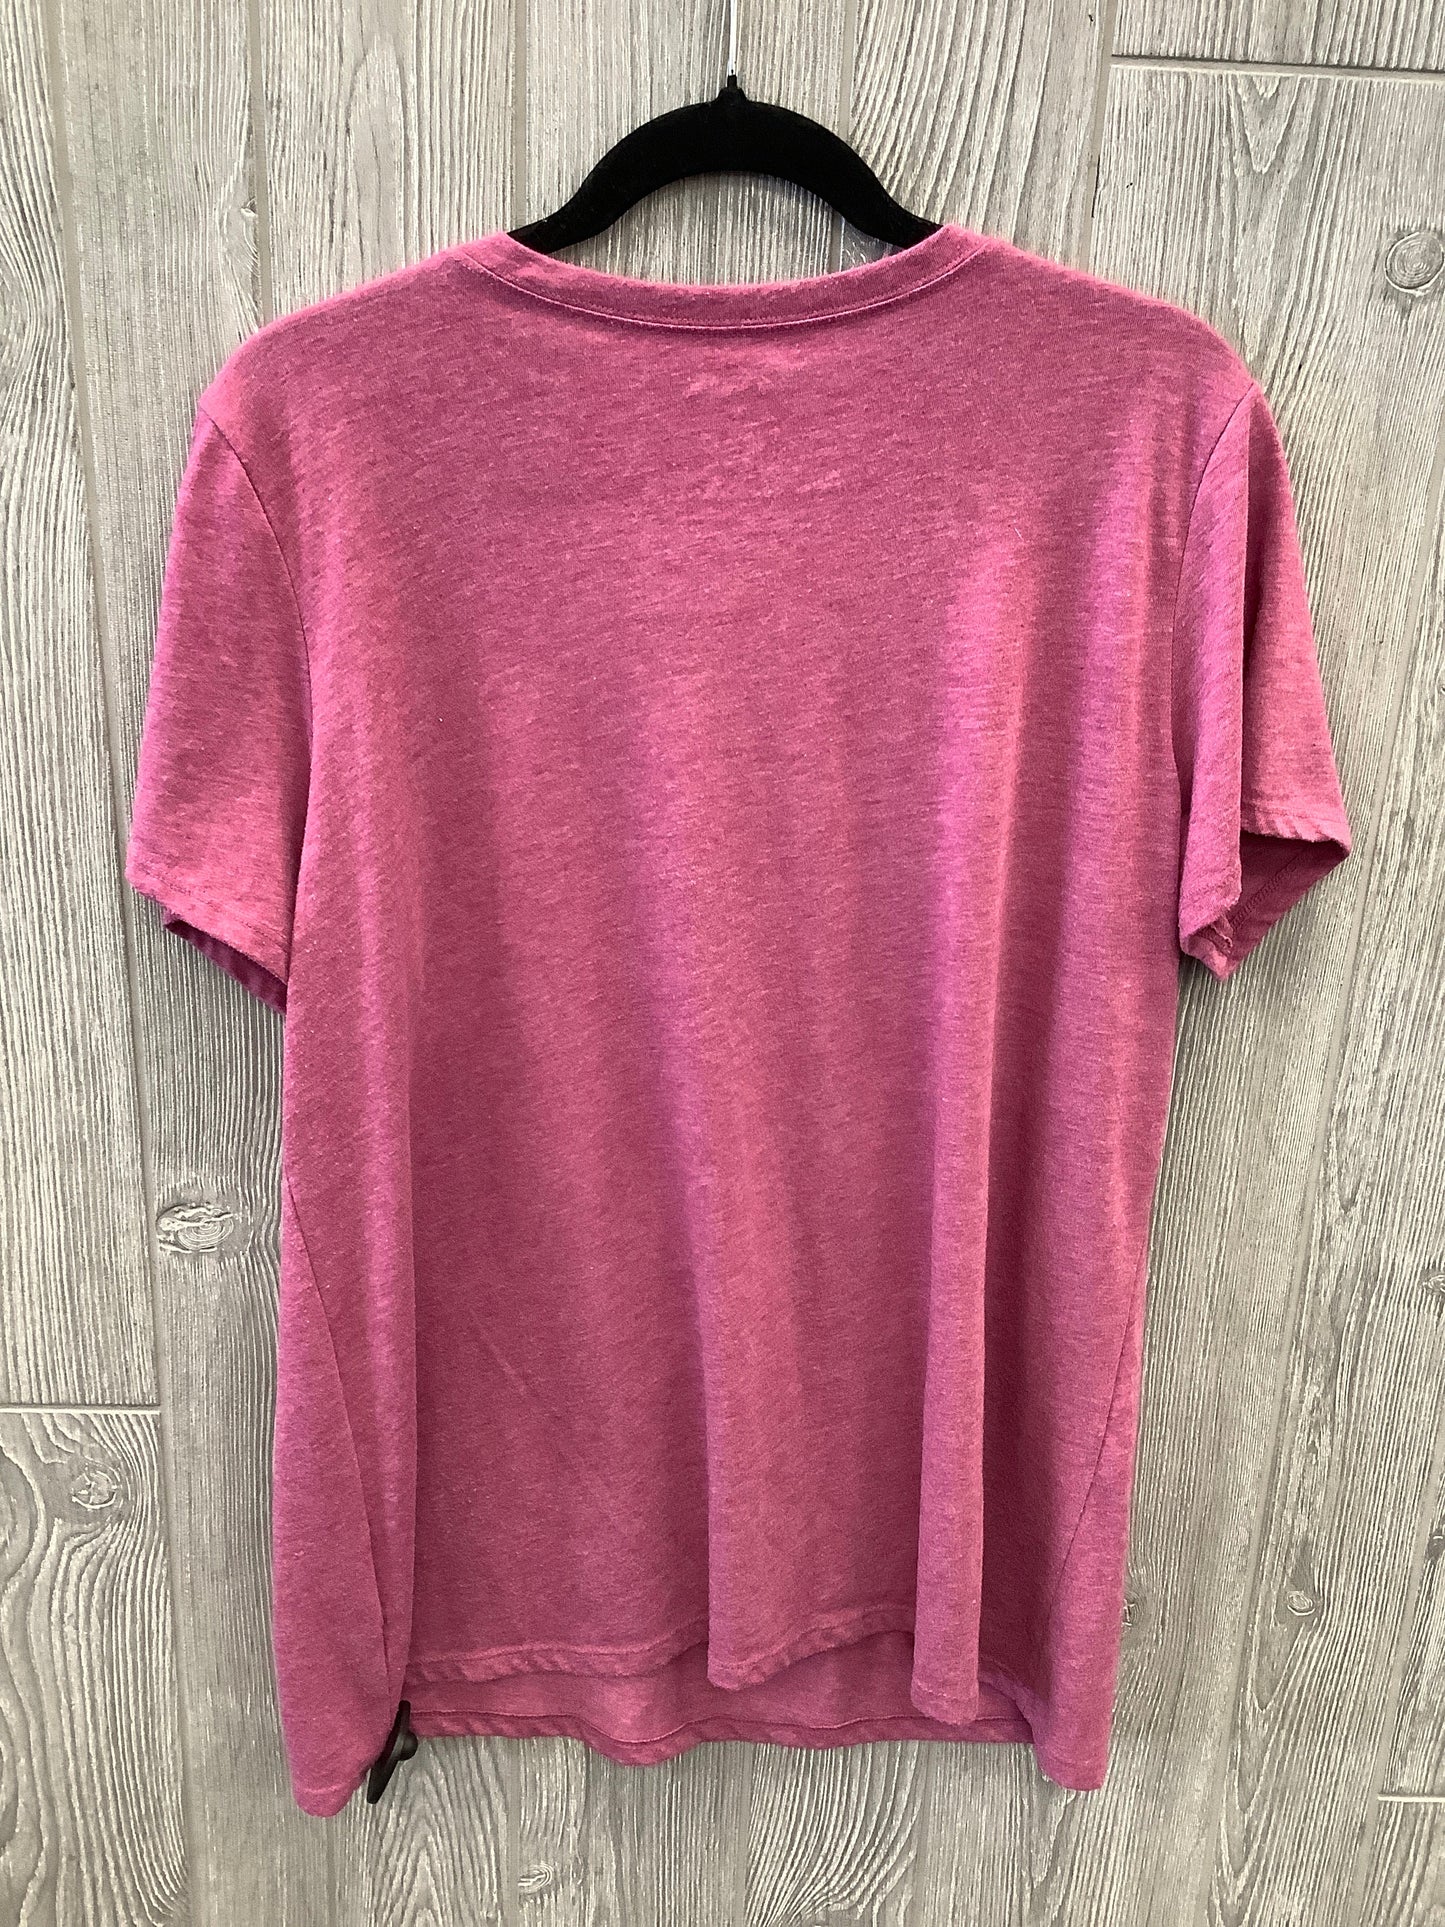 Pink Top Short Sleeve Torrid, Size 1x